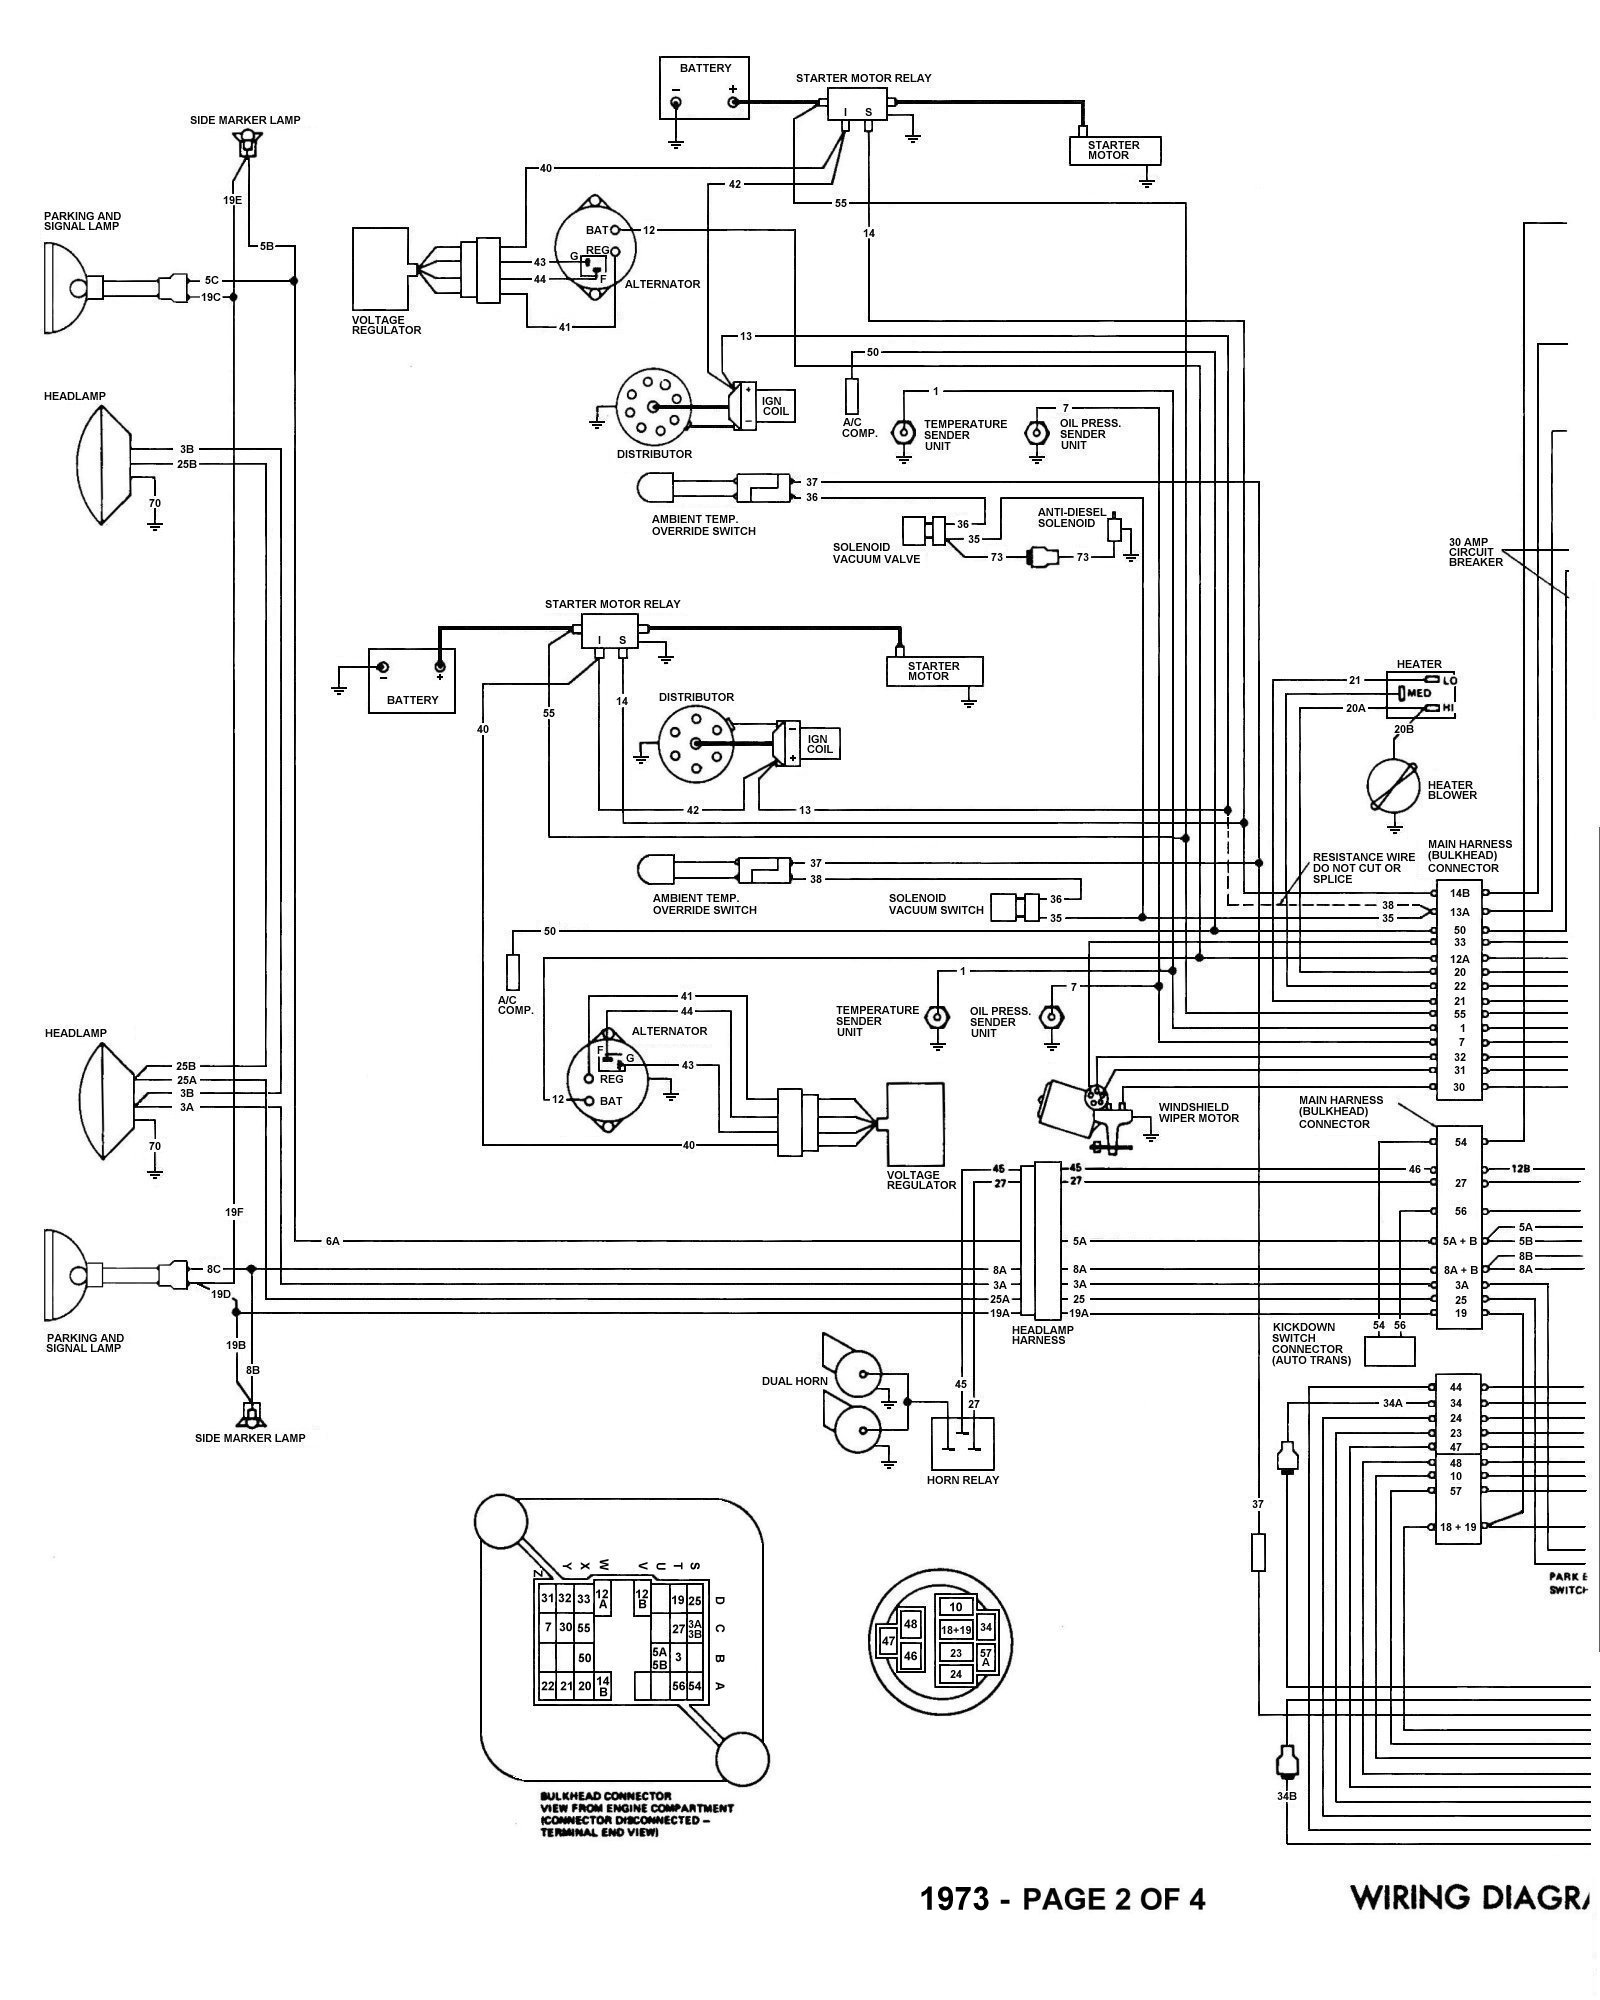 signal stat 900 sigflare wiring diagram